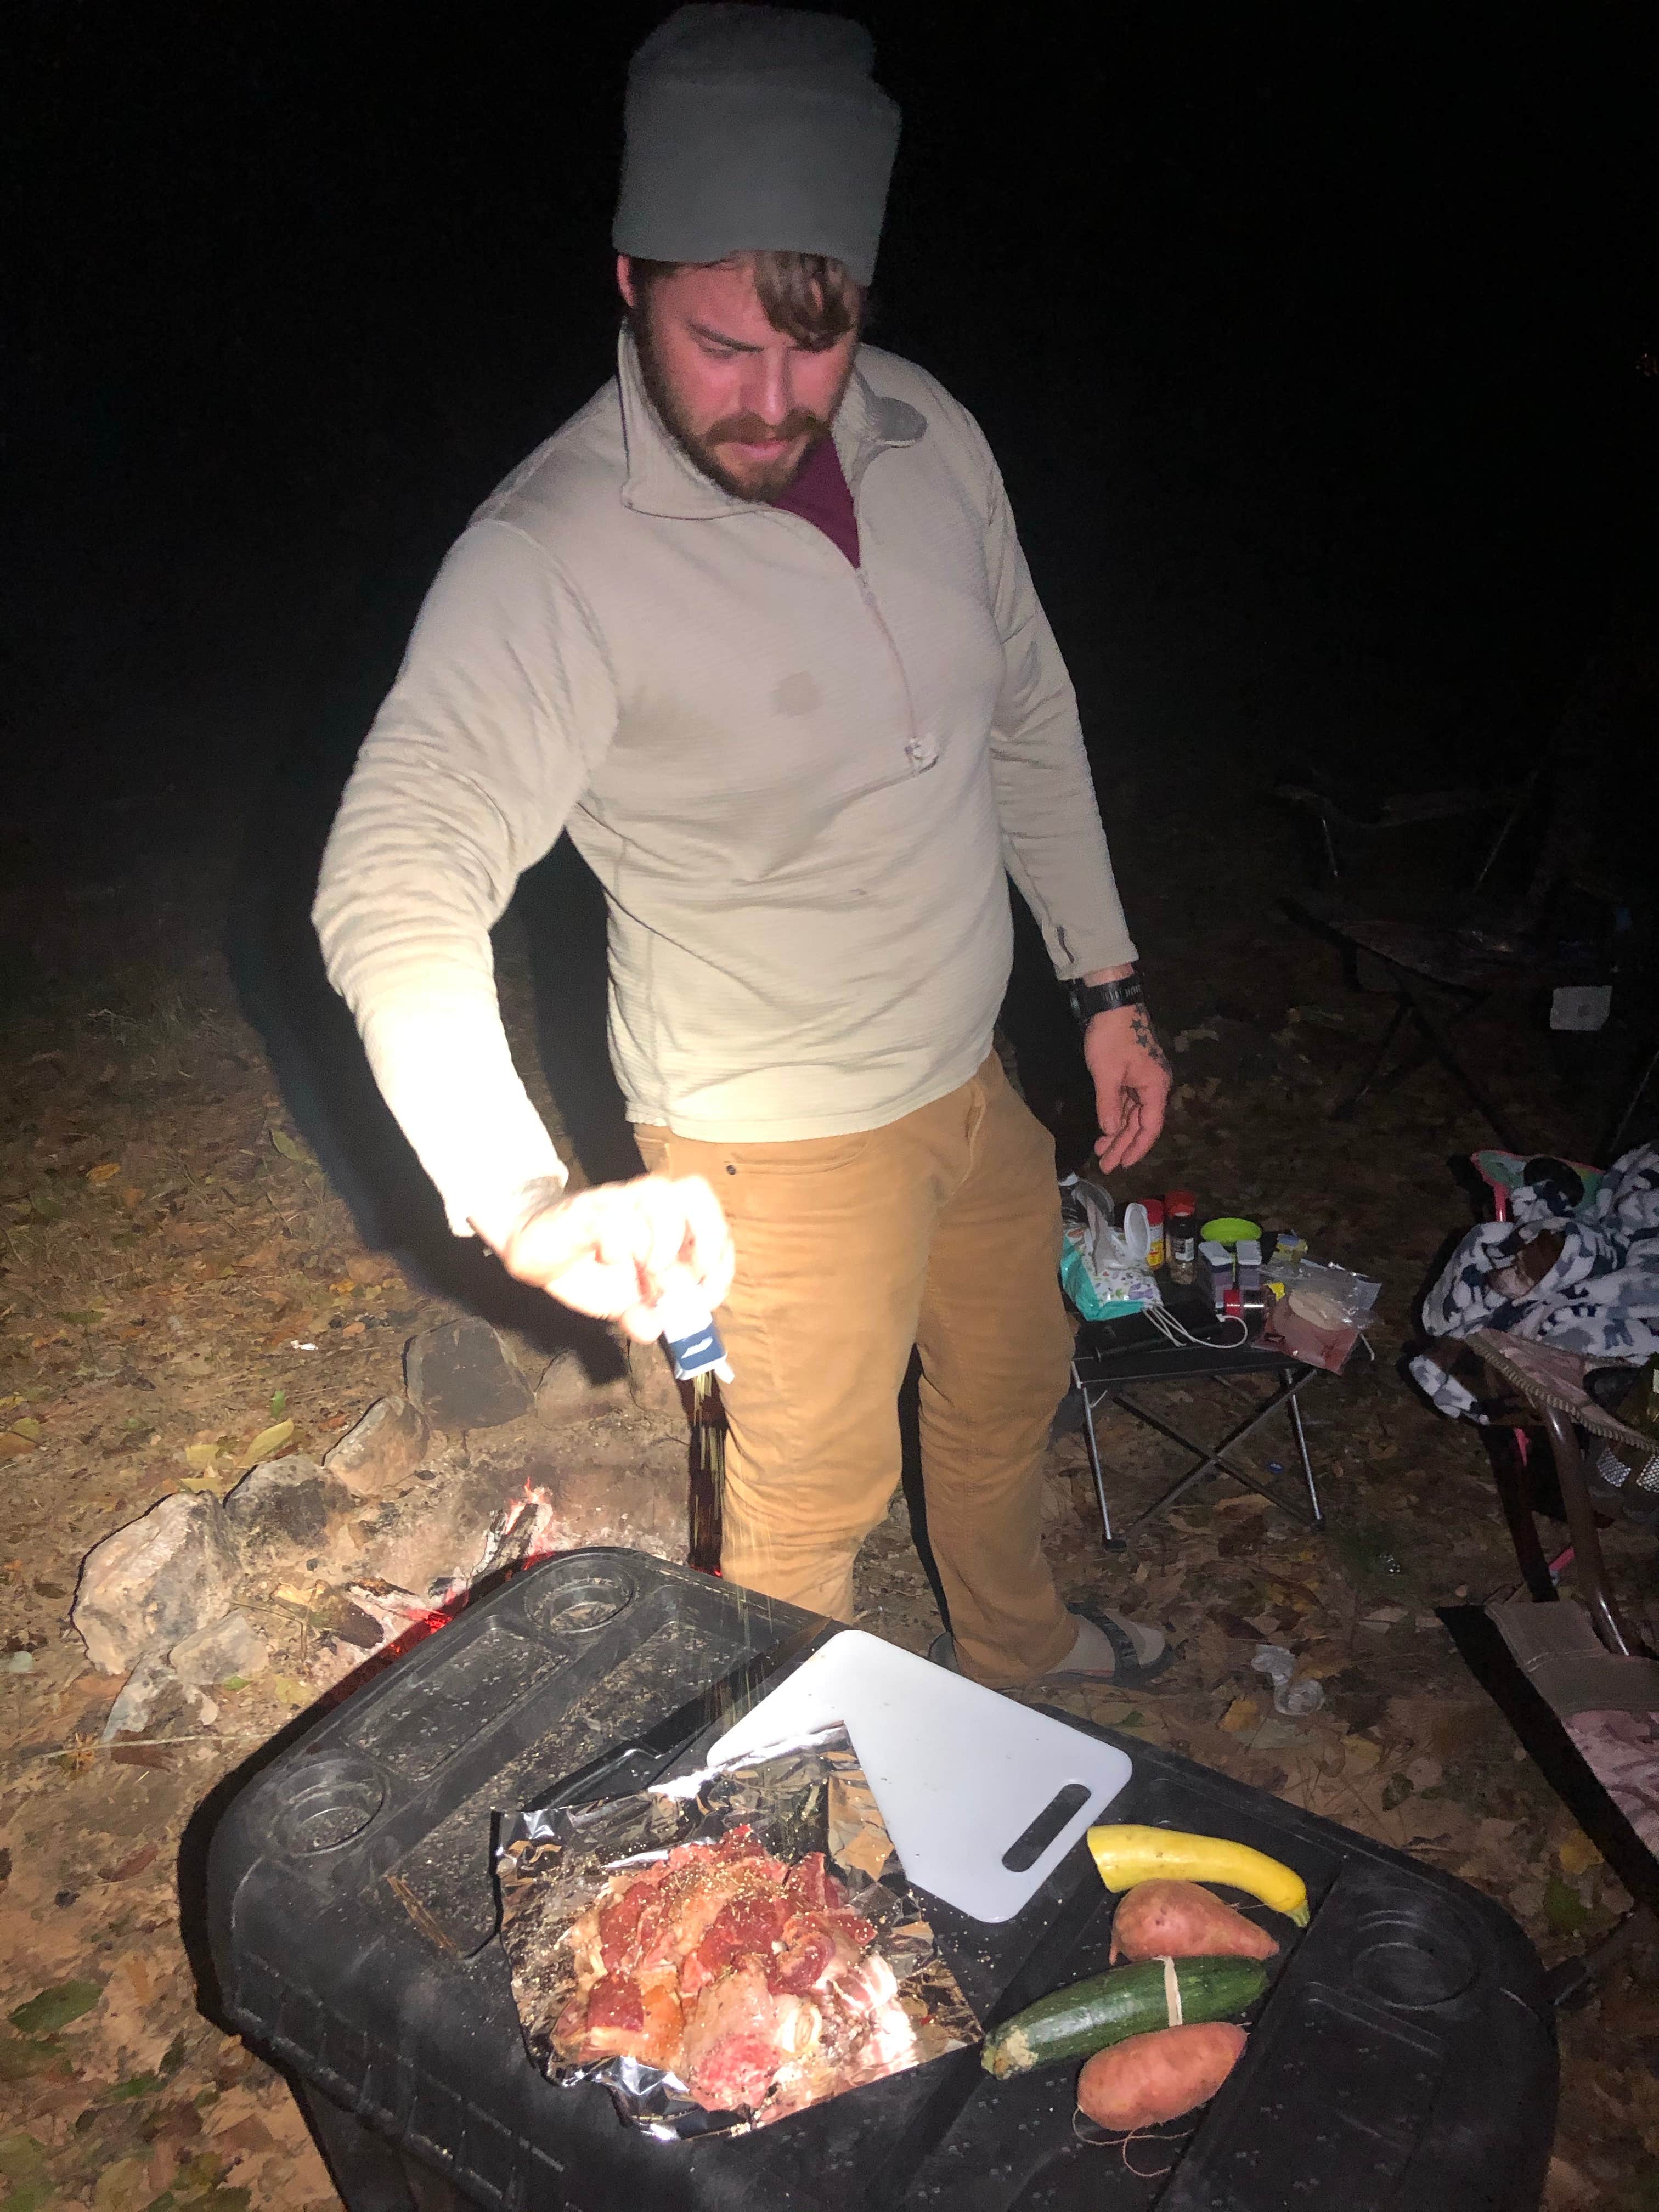 Dinner for the carnivore in primitive campsite